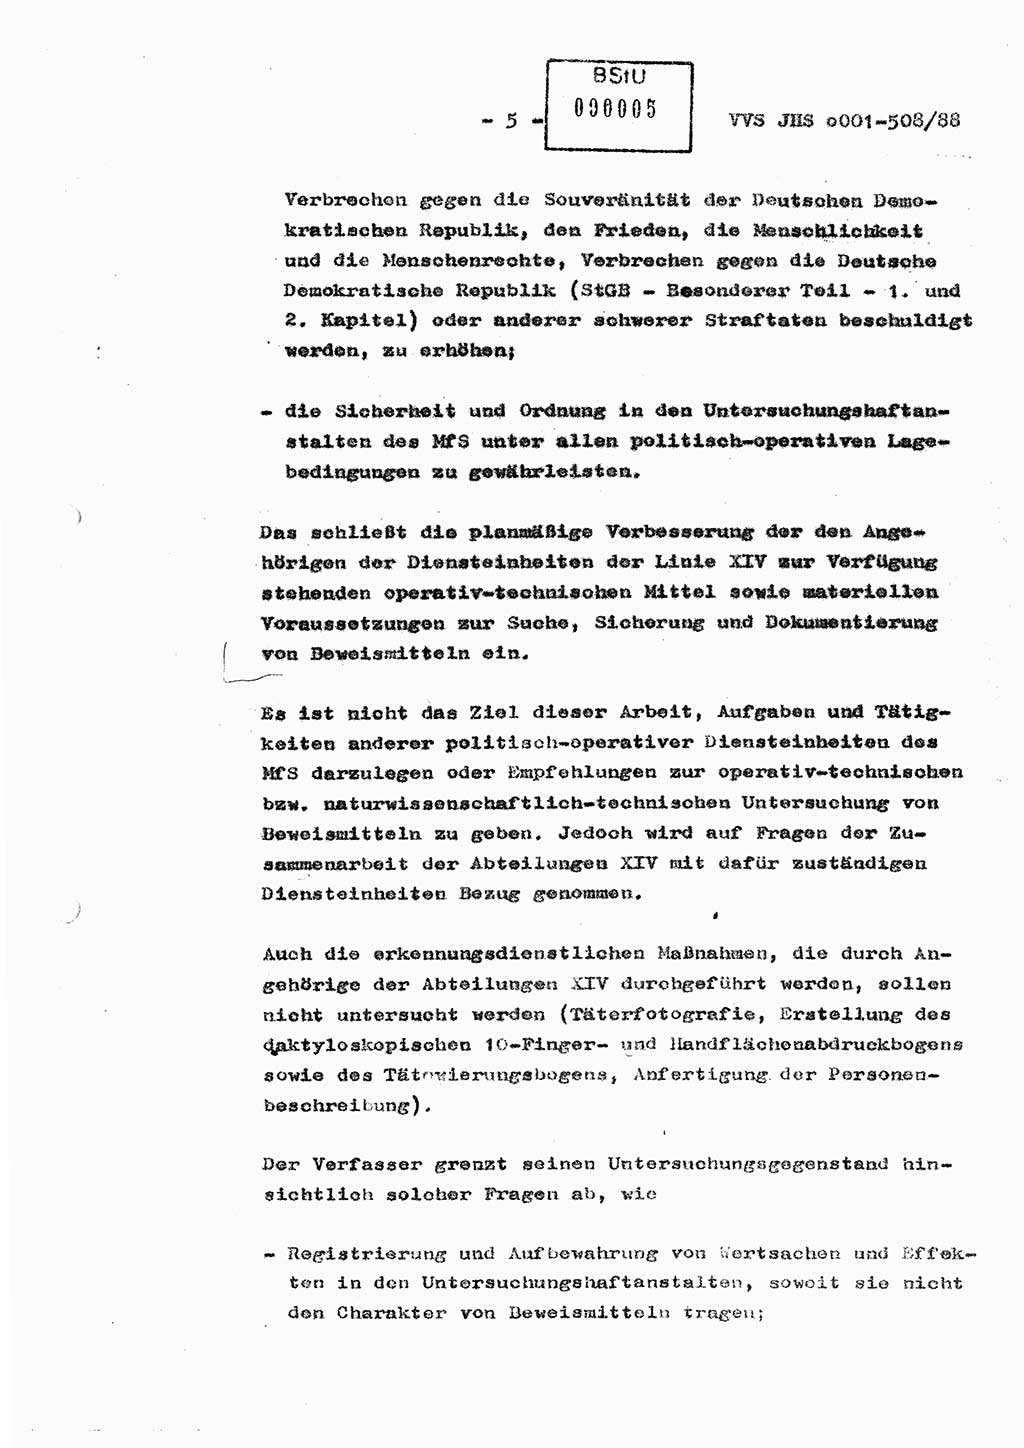 Diplomarbeit Hauptmann Christian Kätzel (Abt. ⅩⅣ), Ministerium für Staatssicherheit (MfS) [Deutsche Demokratische Republik (DDR)], Juristische Hochschule (JHS), Vertrauliche Verschlußsache (VVS) o001-508/88, Potsdam 1988, Blatt 5 (Dipl.-Arb. MfS DDR JHS VVS o001-508/88 1988, Bl. 5)